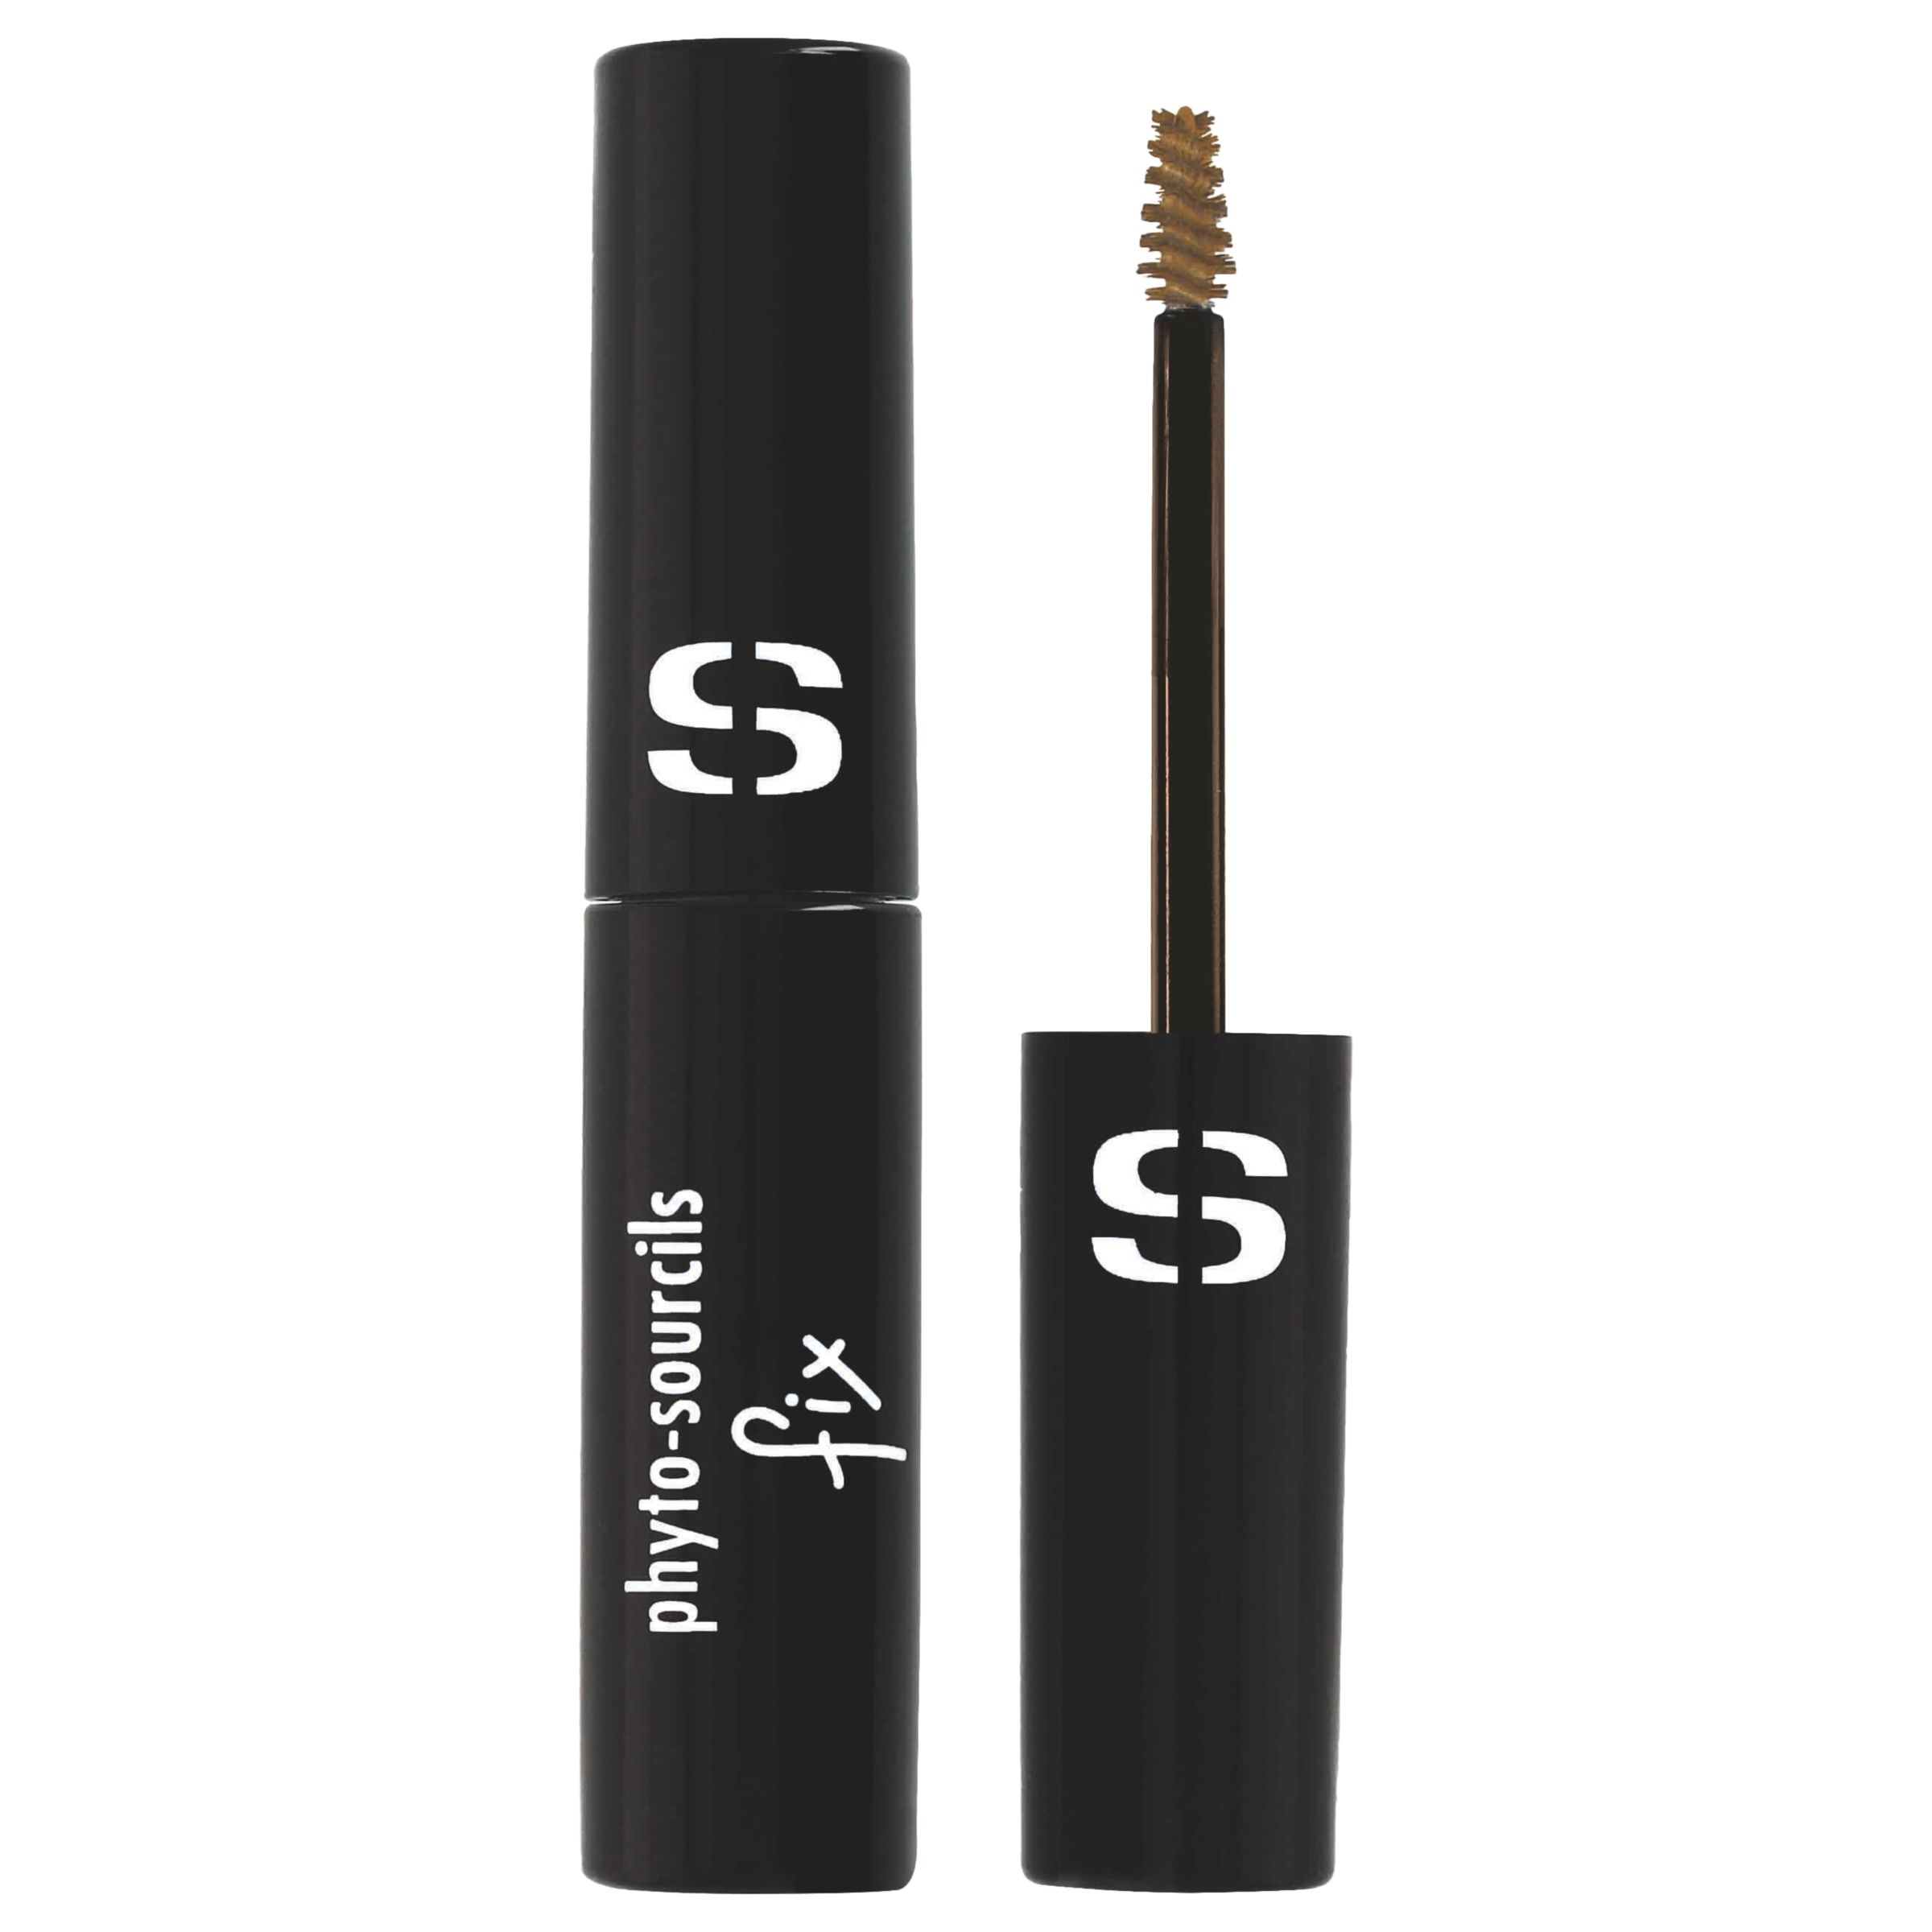 Sisley-Paris Phyto-Sourcils Fix Eyebrow Makeup, 1 Light Medium 1